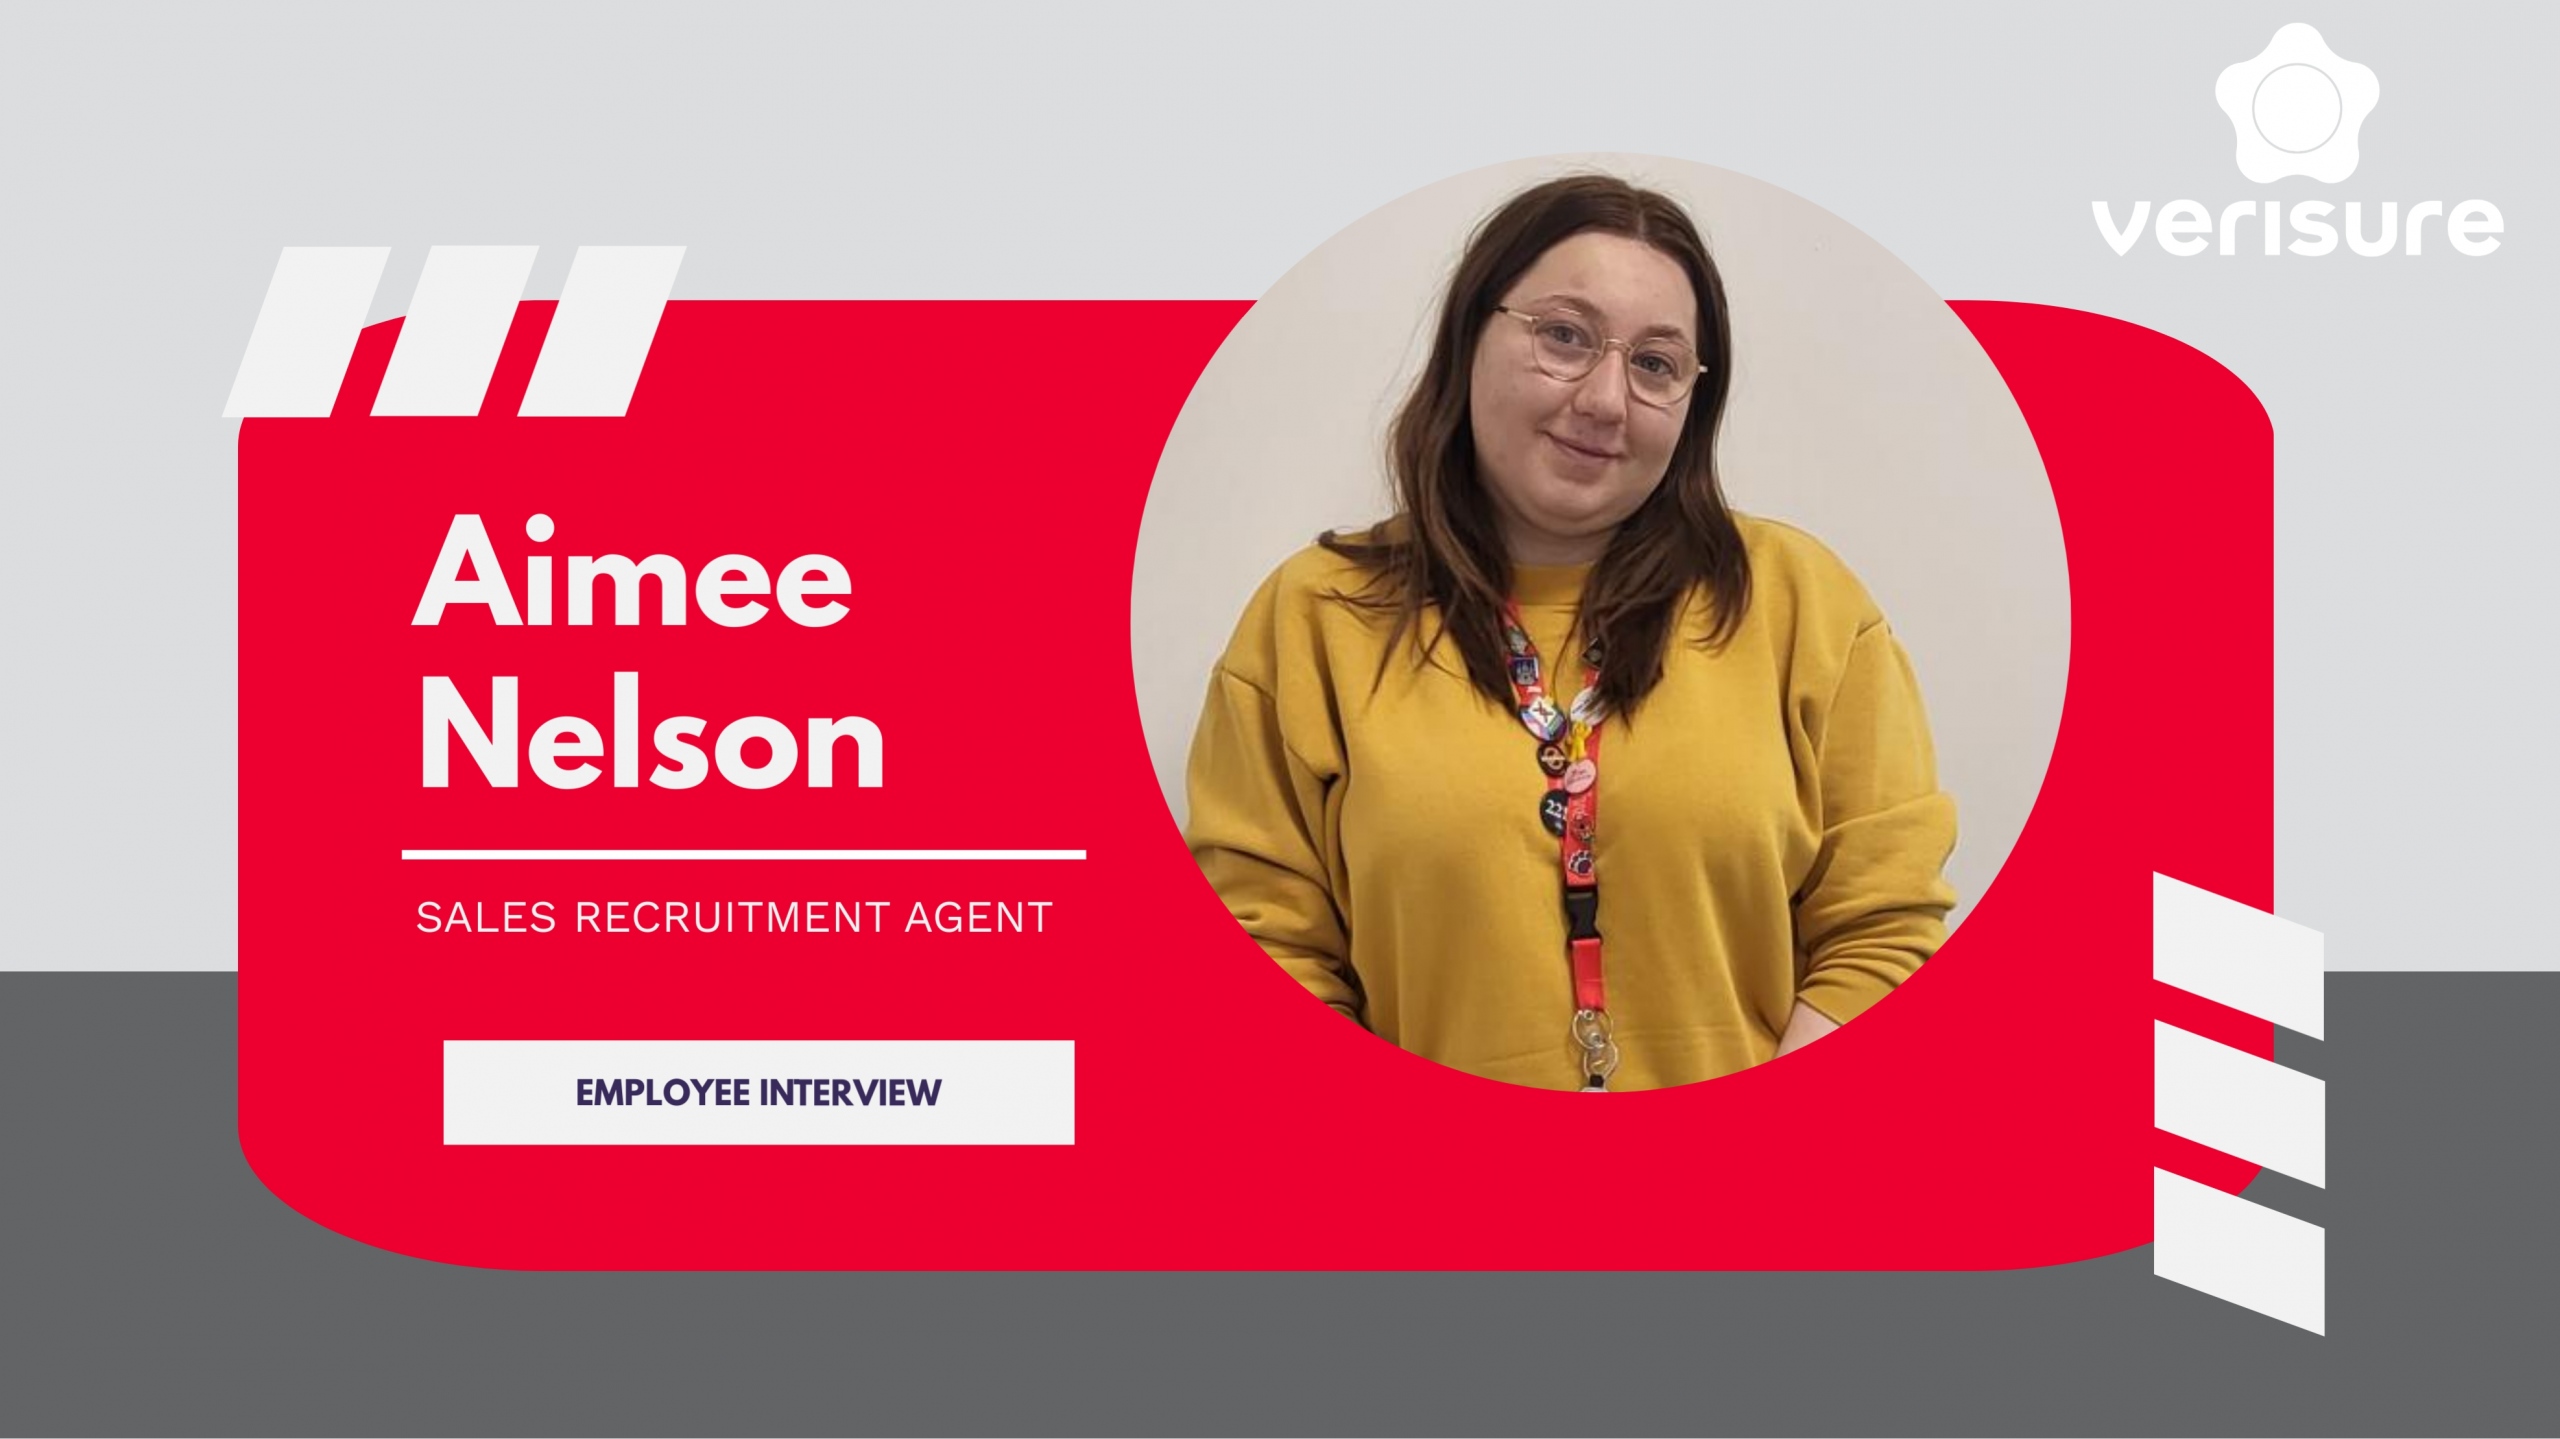 Aimee Nelson, Sales Recruitment Agent